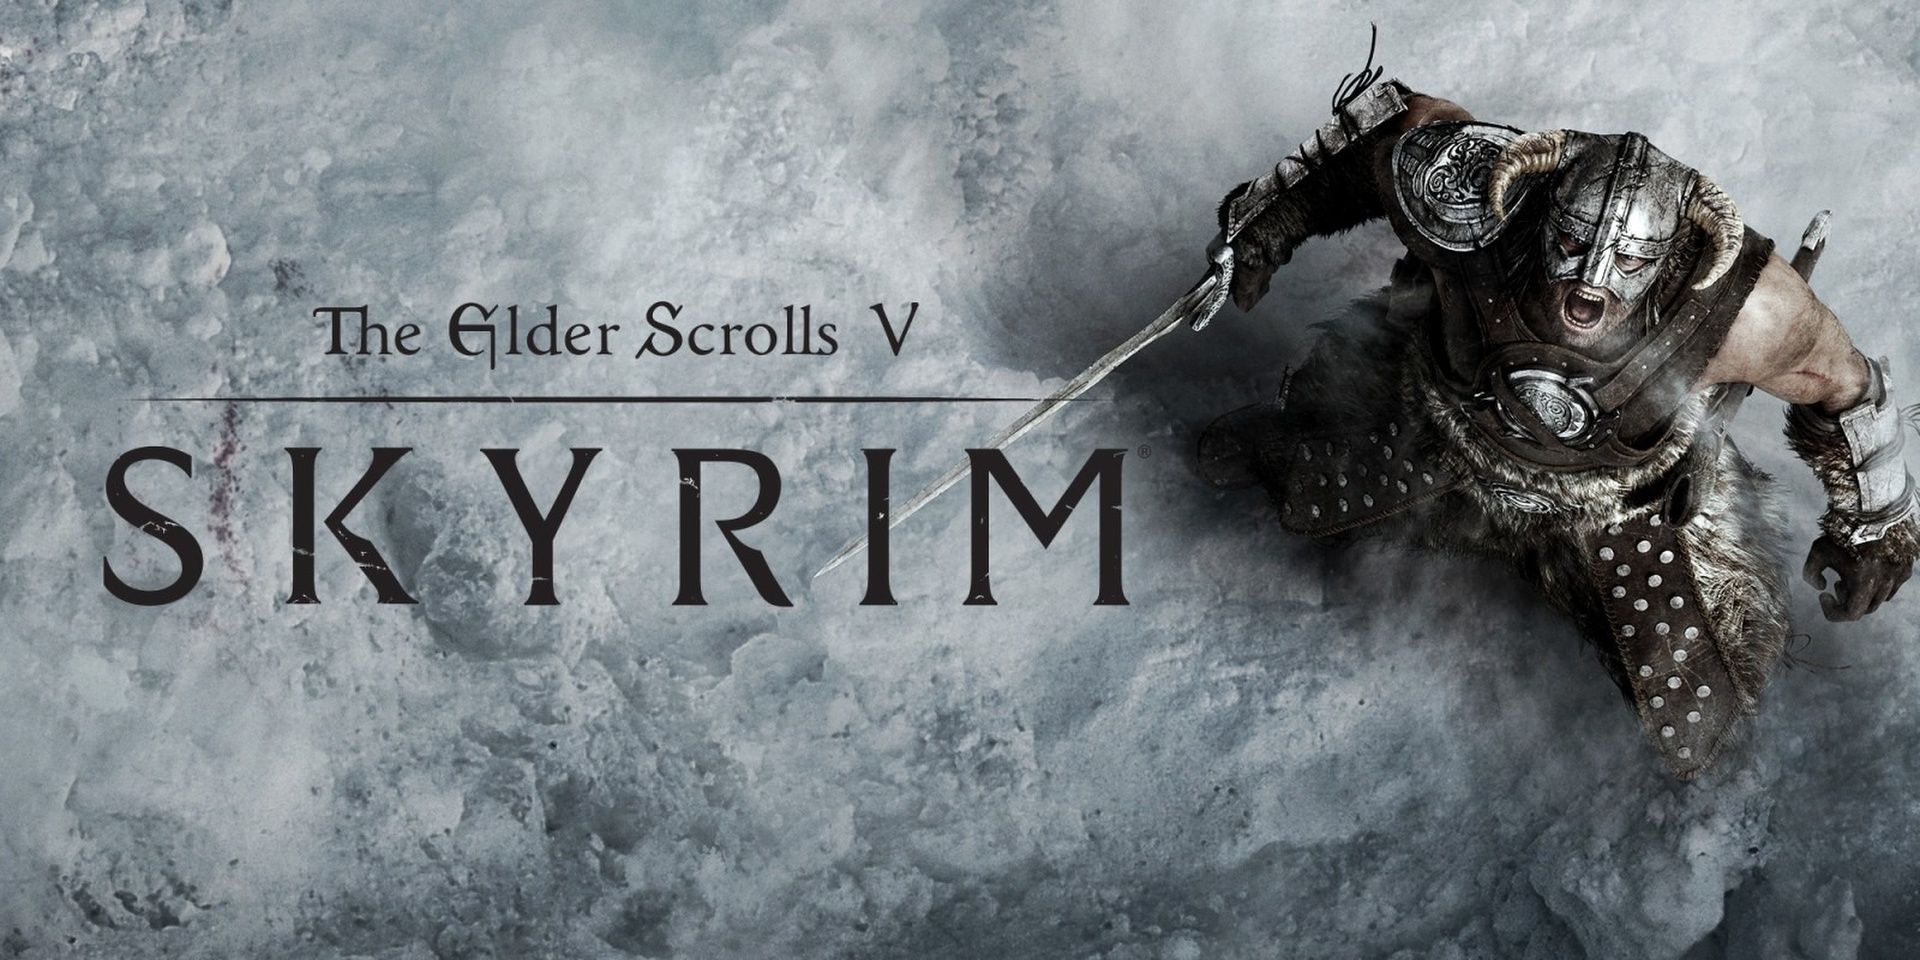 The Elder Scrolls V Skyrim image cover for the Nintendo Switch